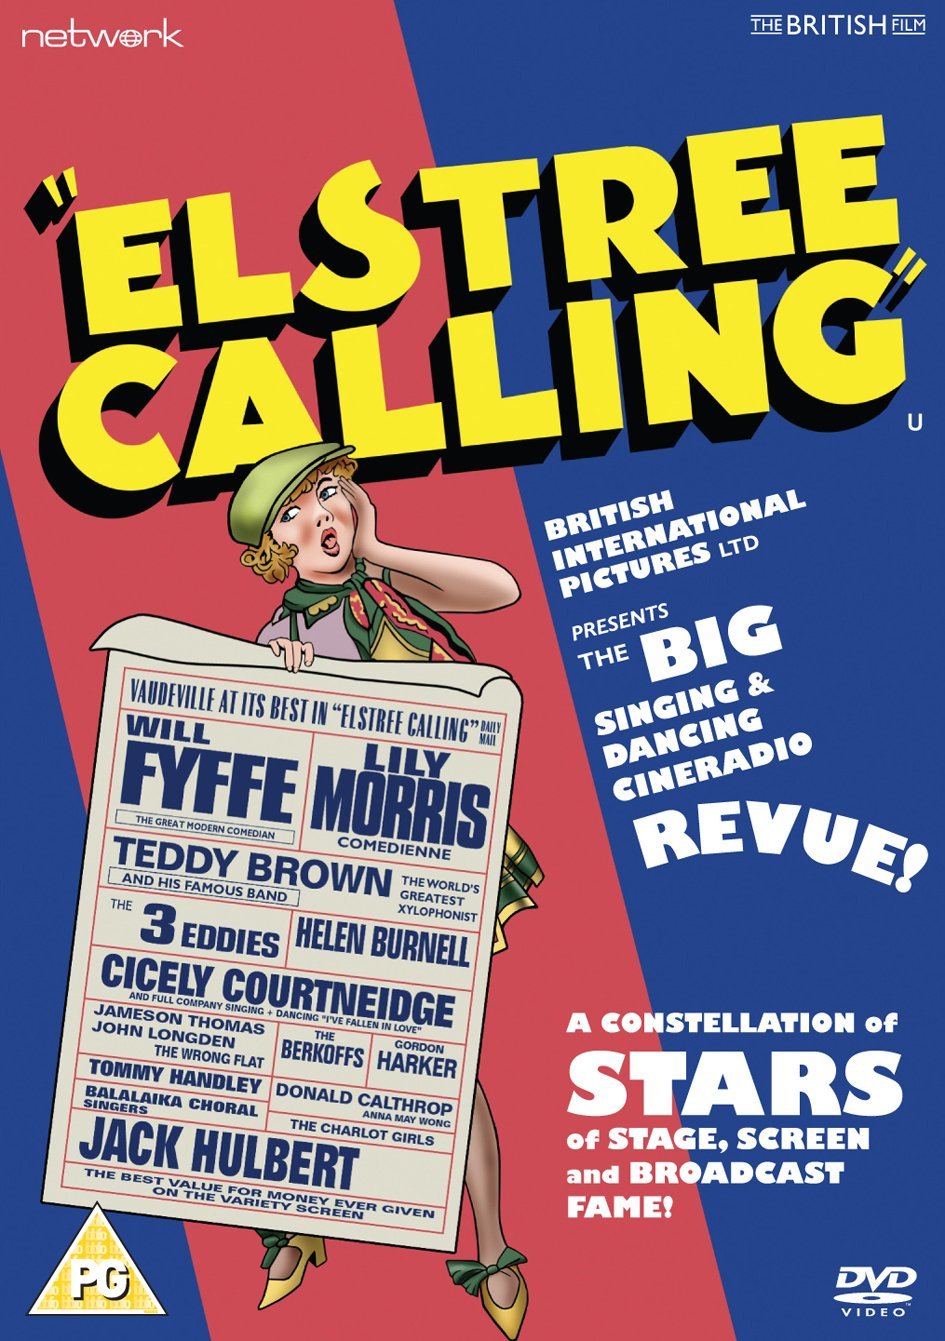 Elstree Calling